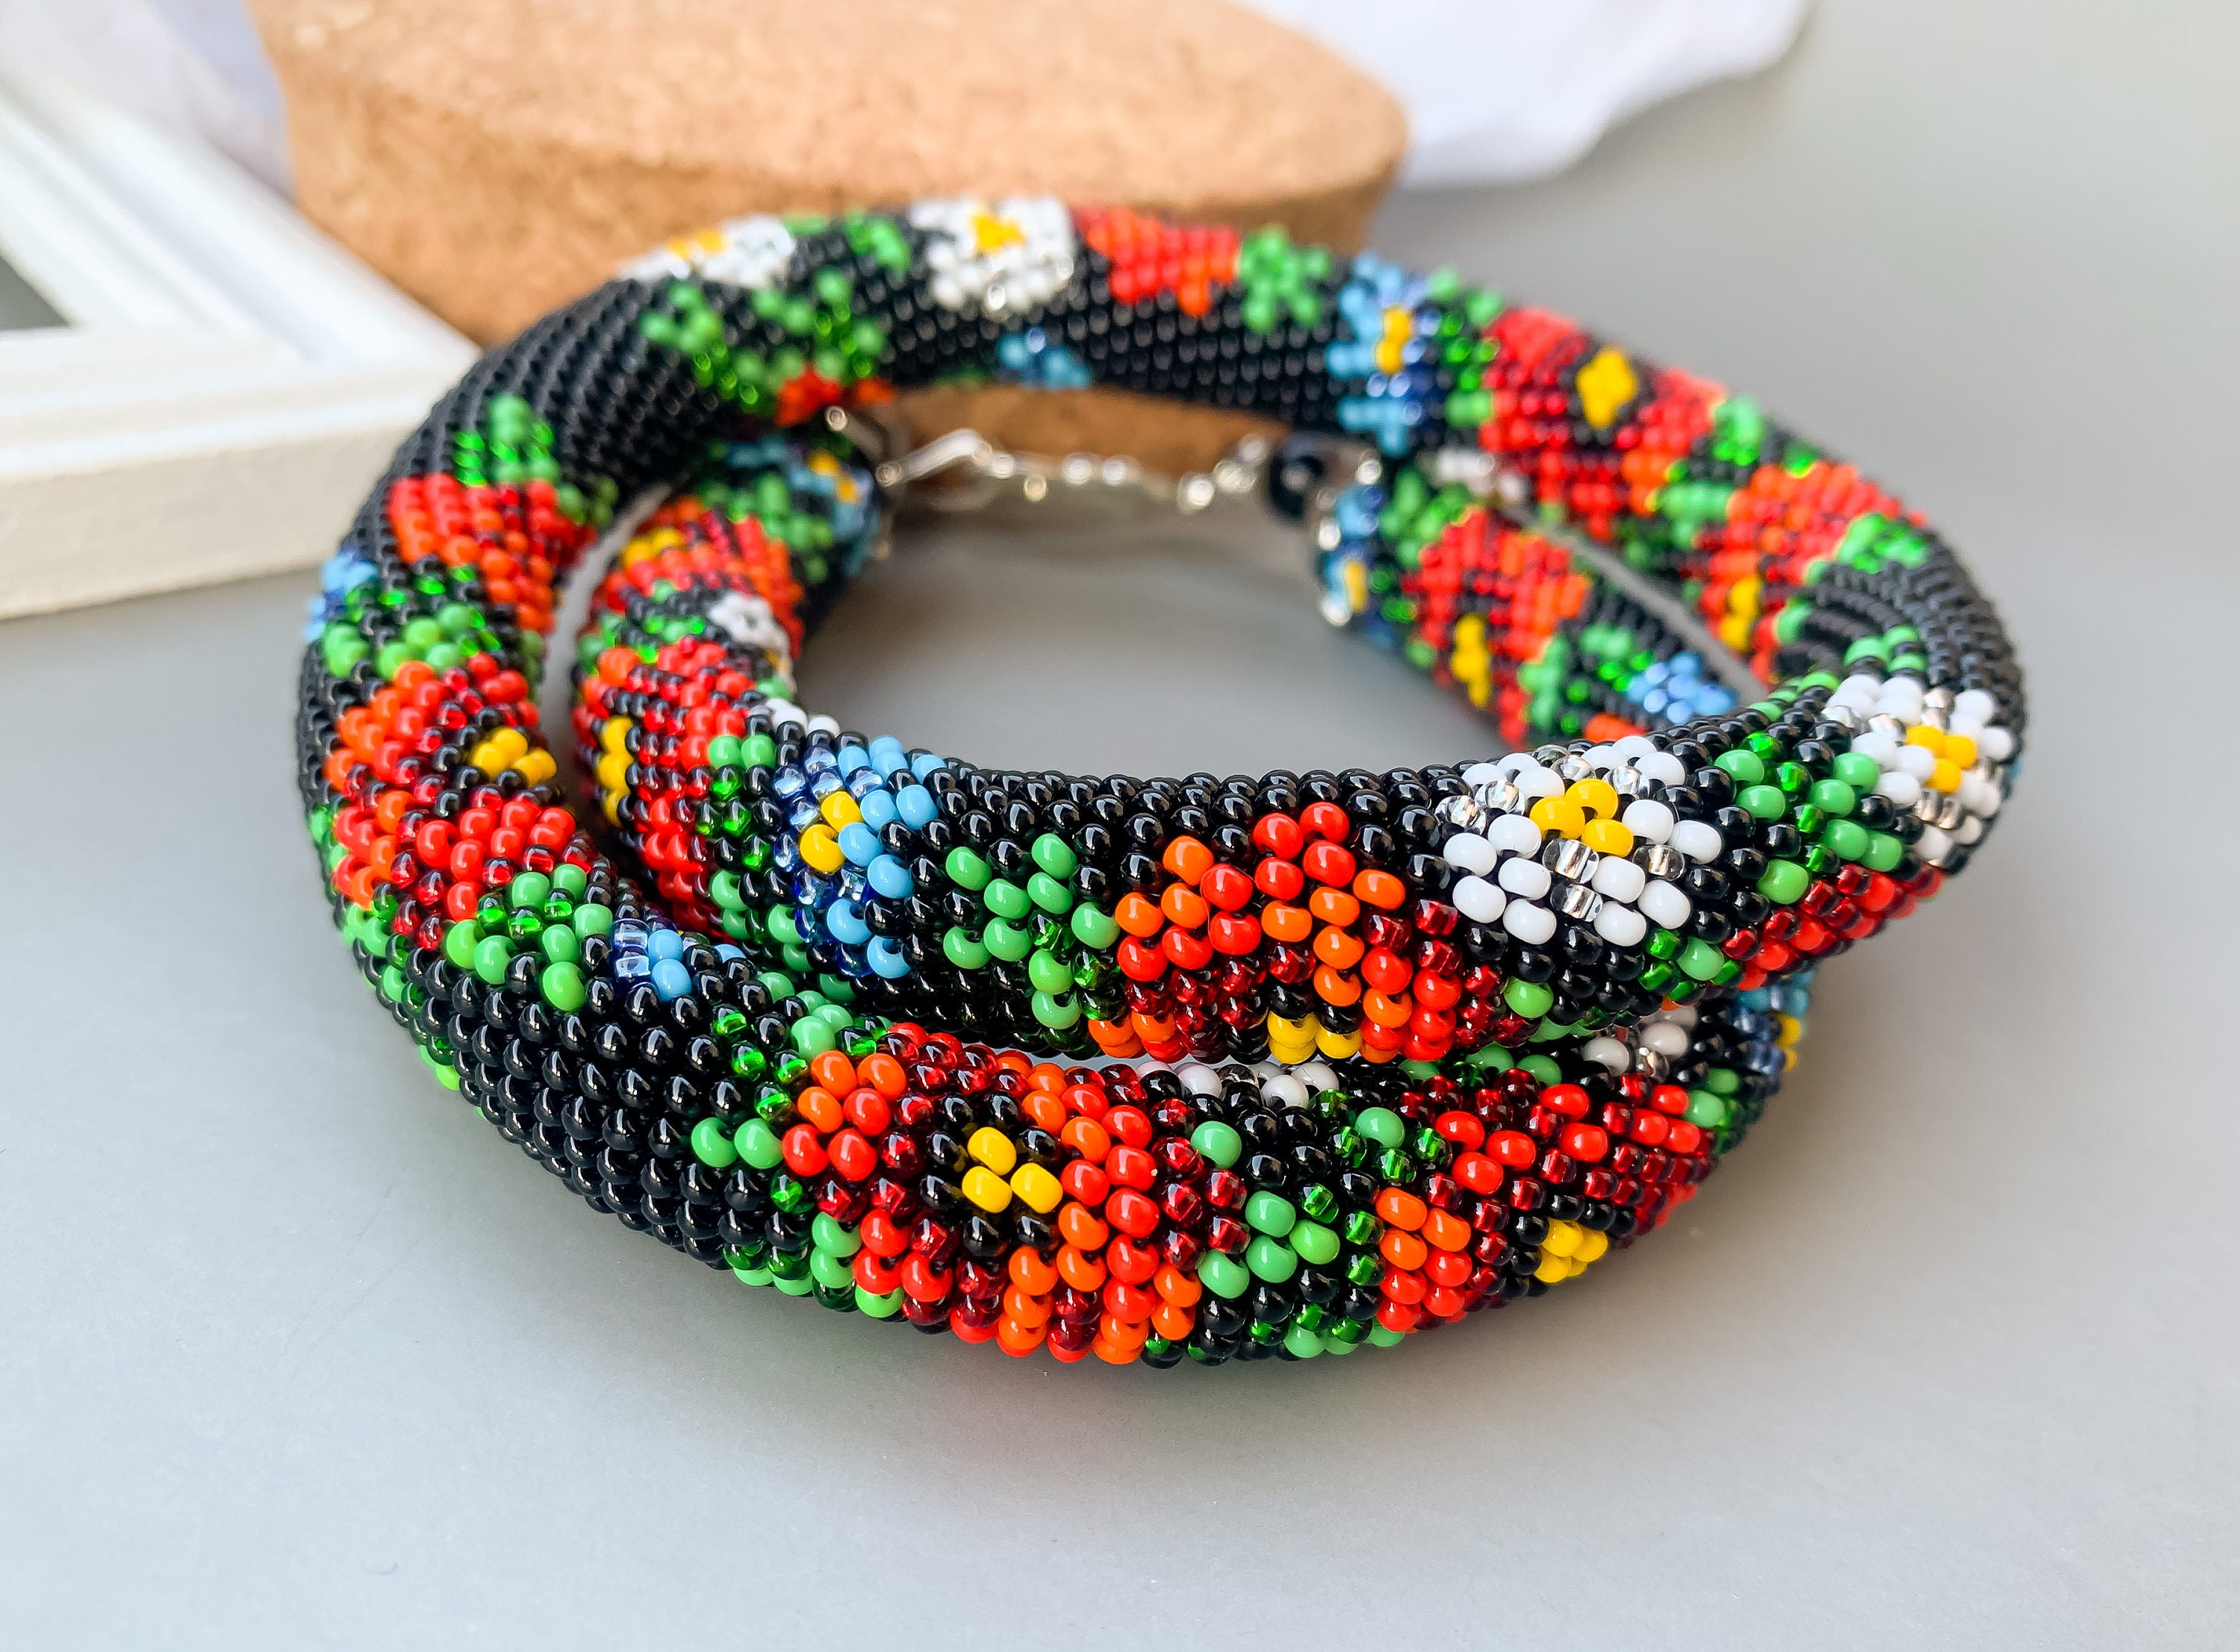 Bead crochet kit bracelet, Craft kit for adults, DIY jewelry - Inspire  Uplift